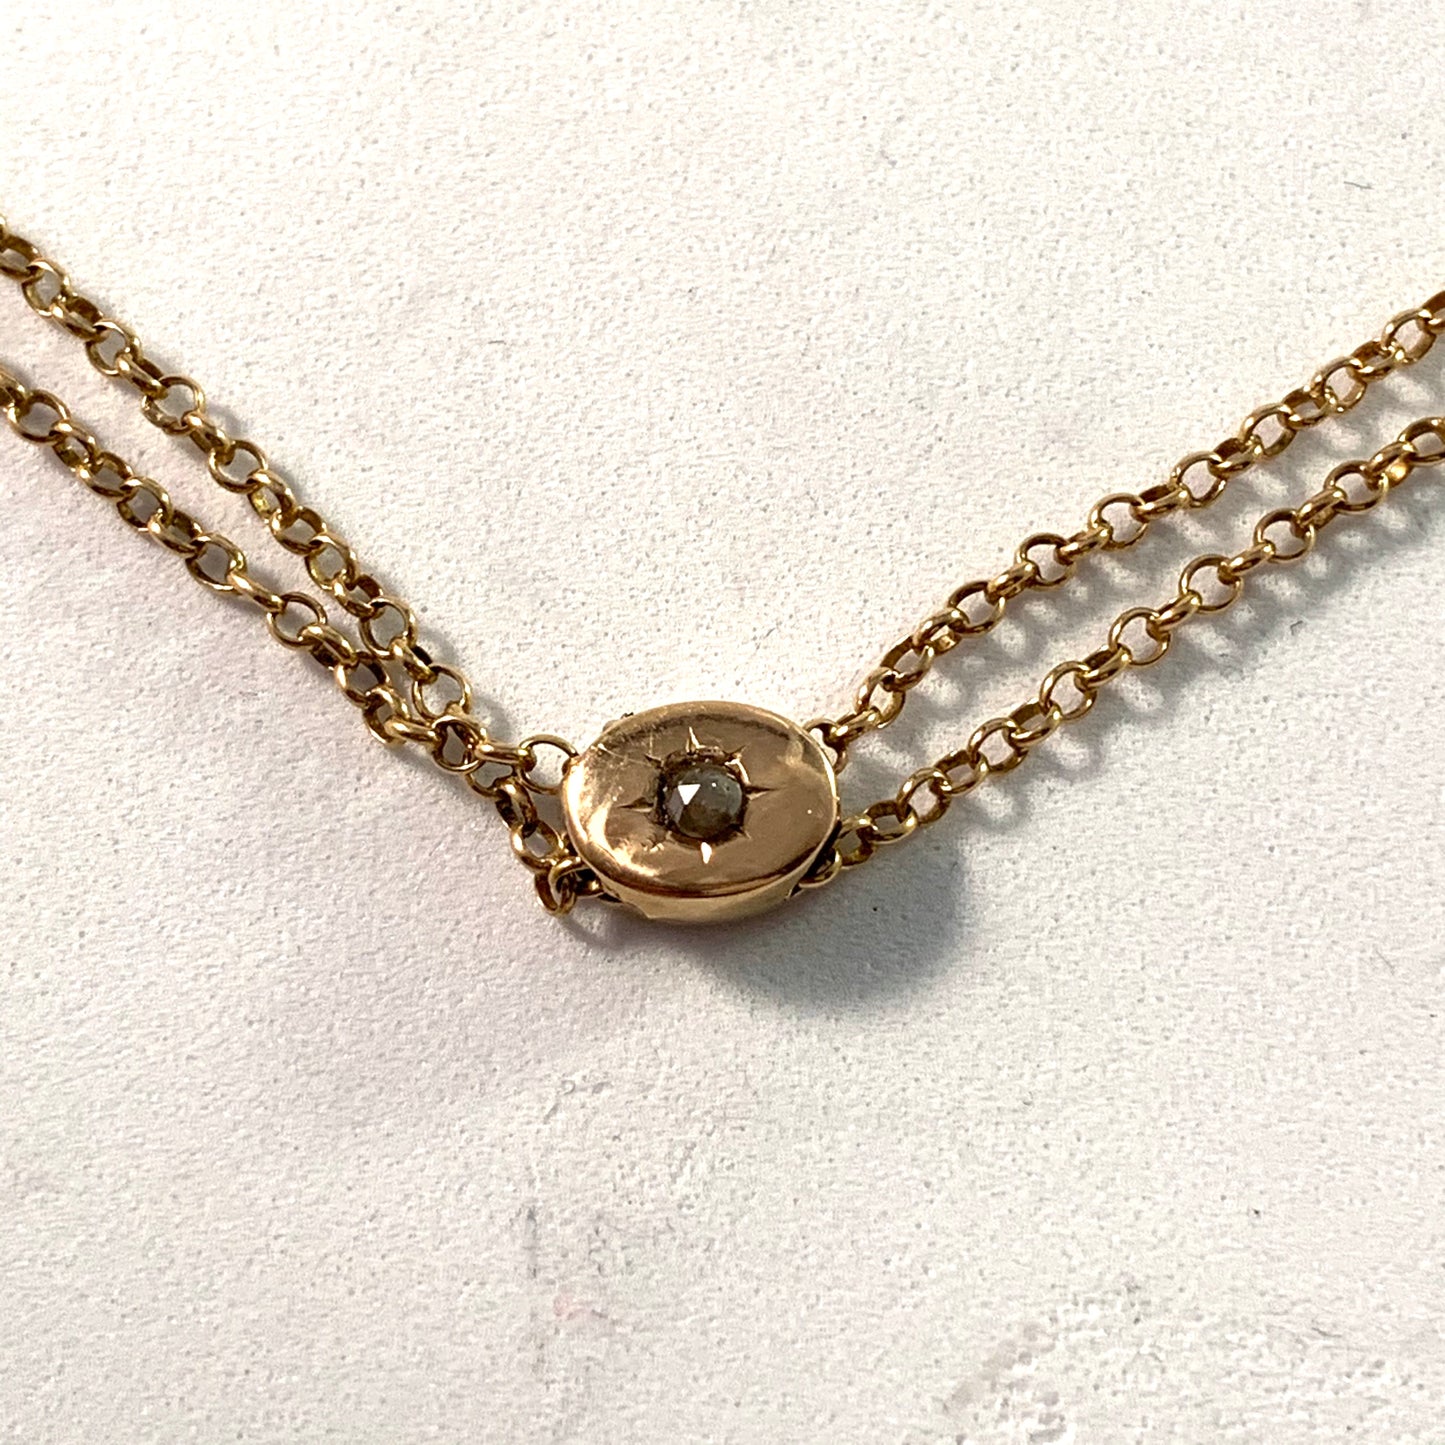 Dahlgren Sweden 1900 Antique 18k Gold Rose Cut Diamond 27.5in Long Two Strand Necklace.